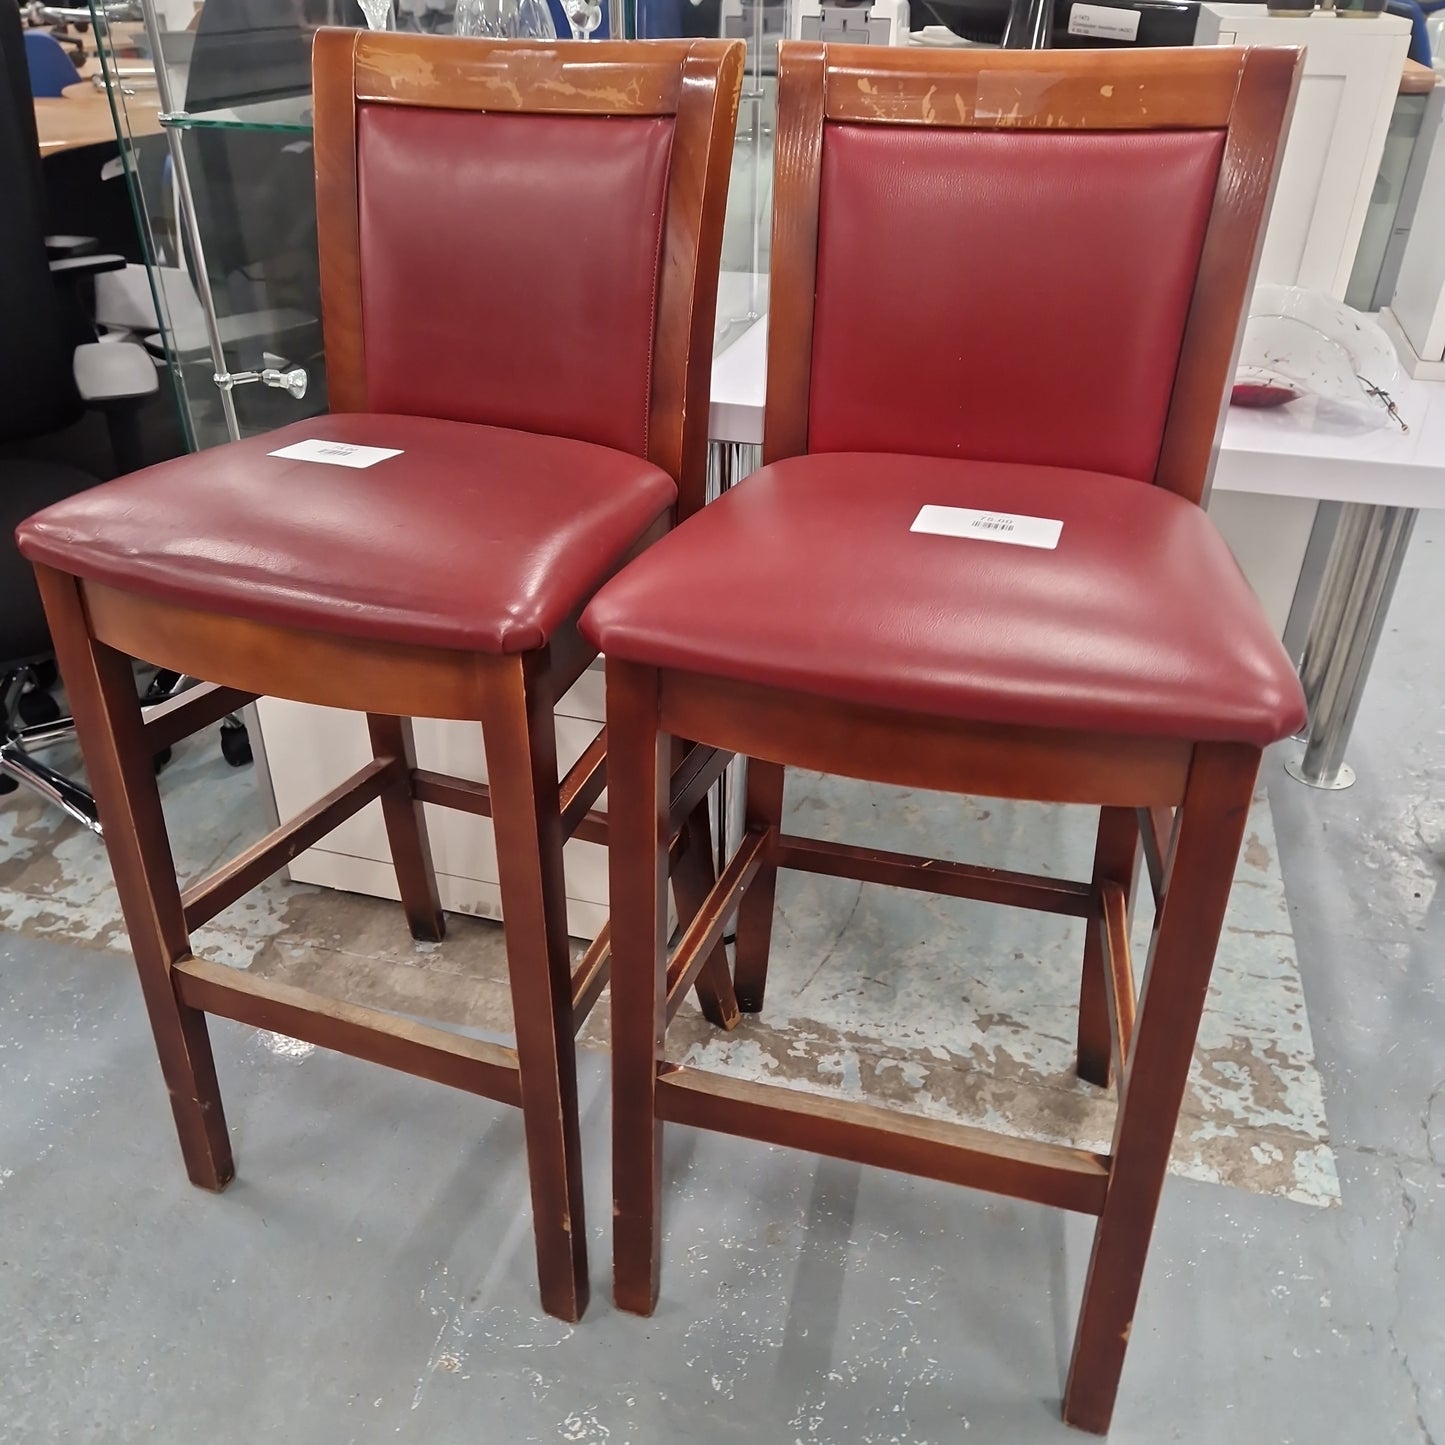 Red bar stool